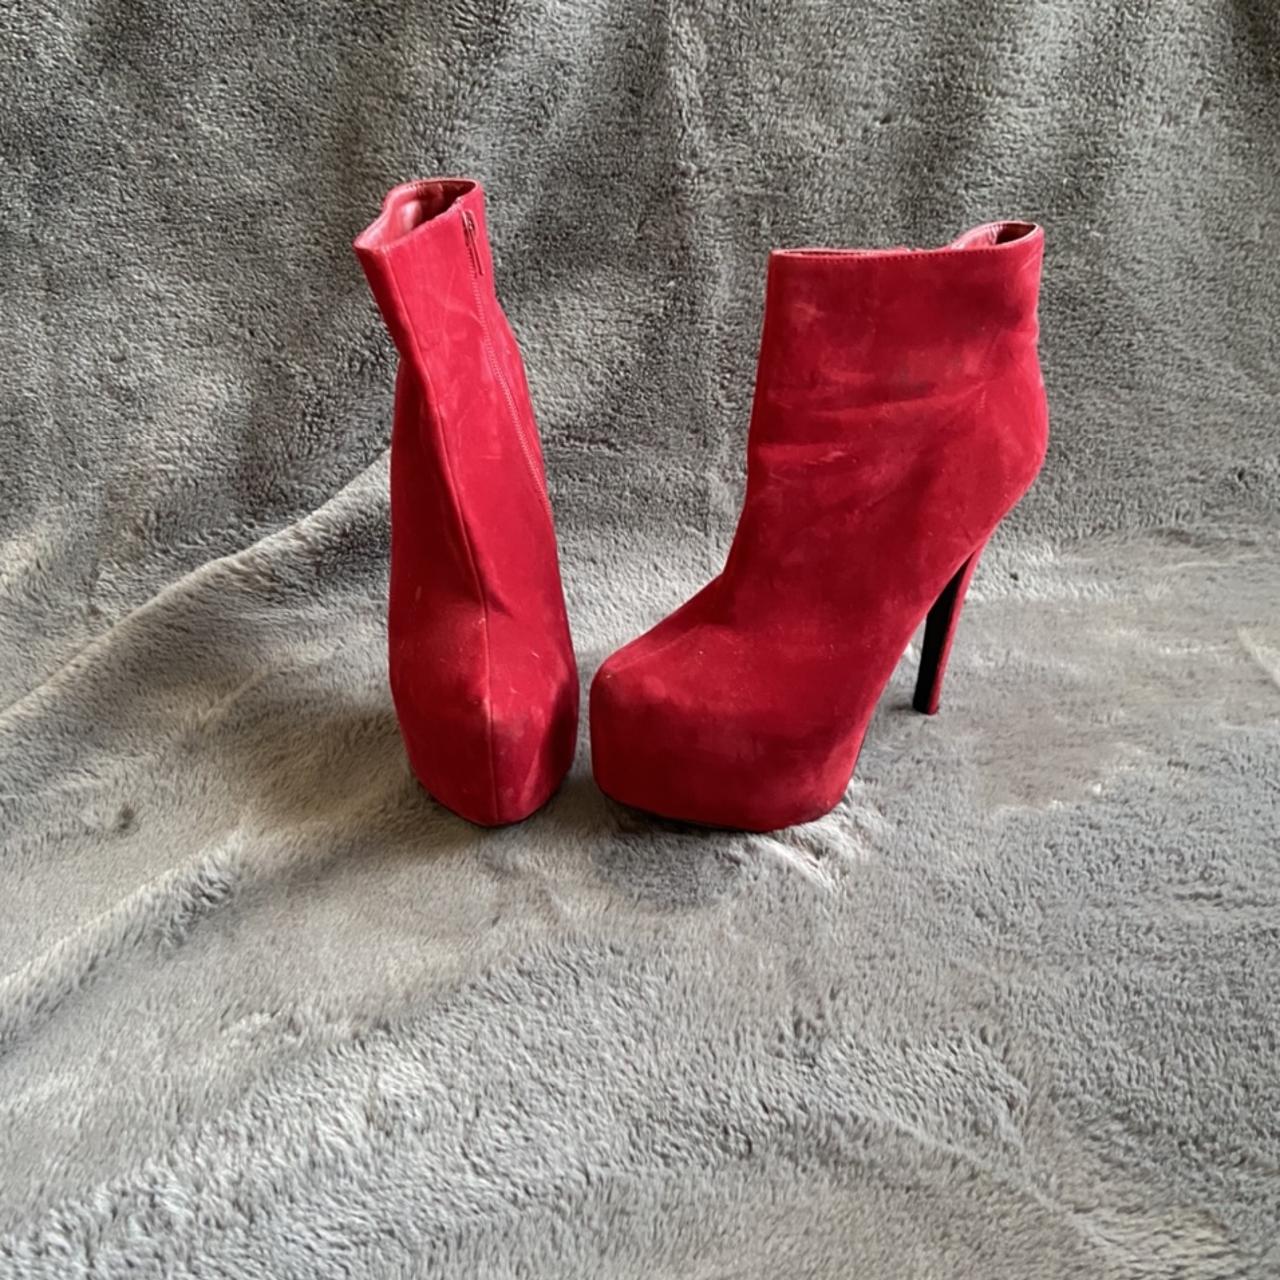 Red Booties ‘Geri halliwell costume style’ Red... - Depop